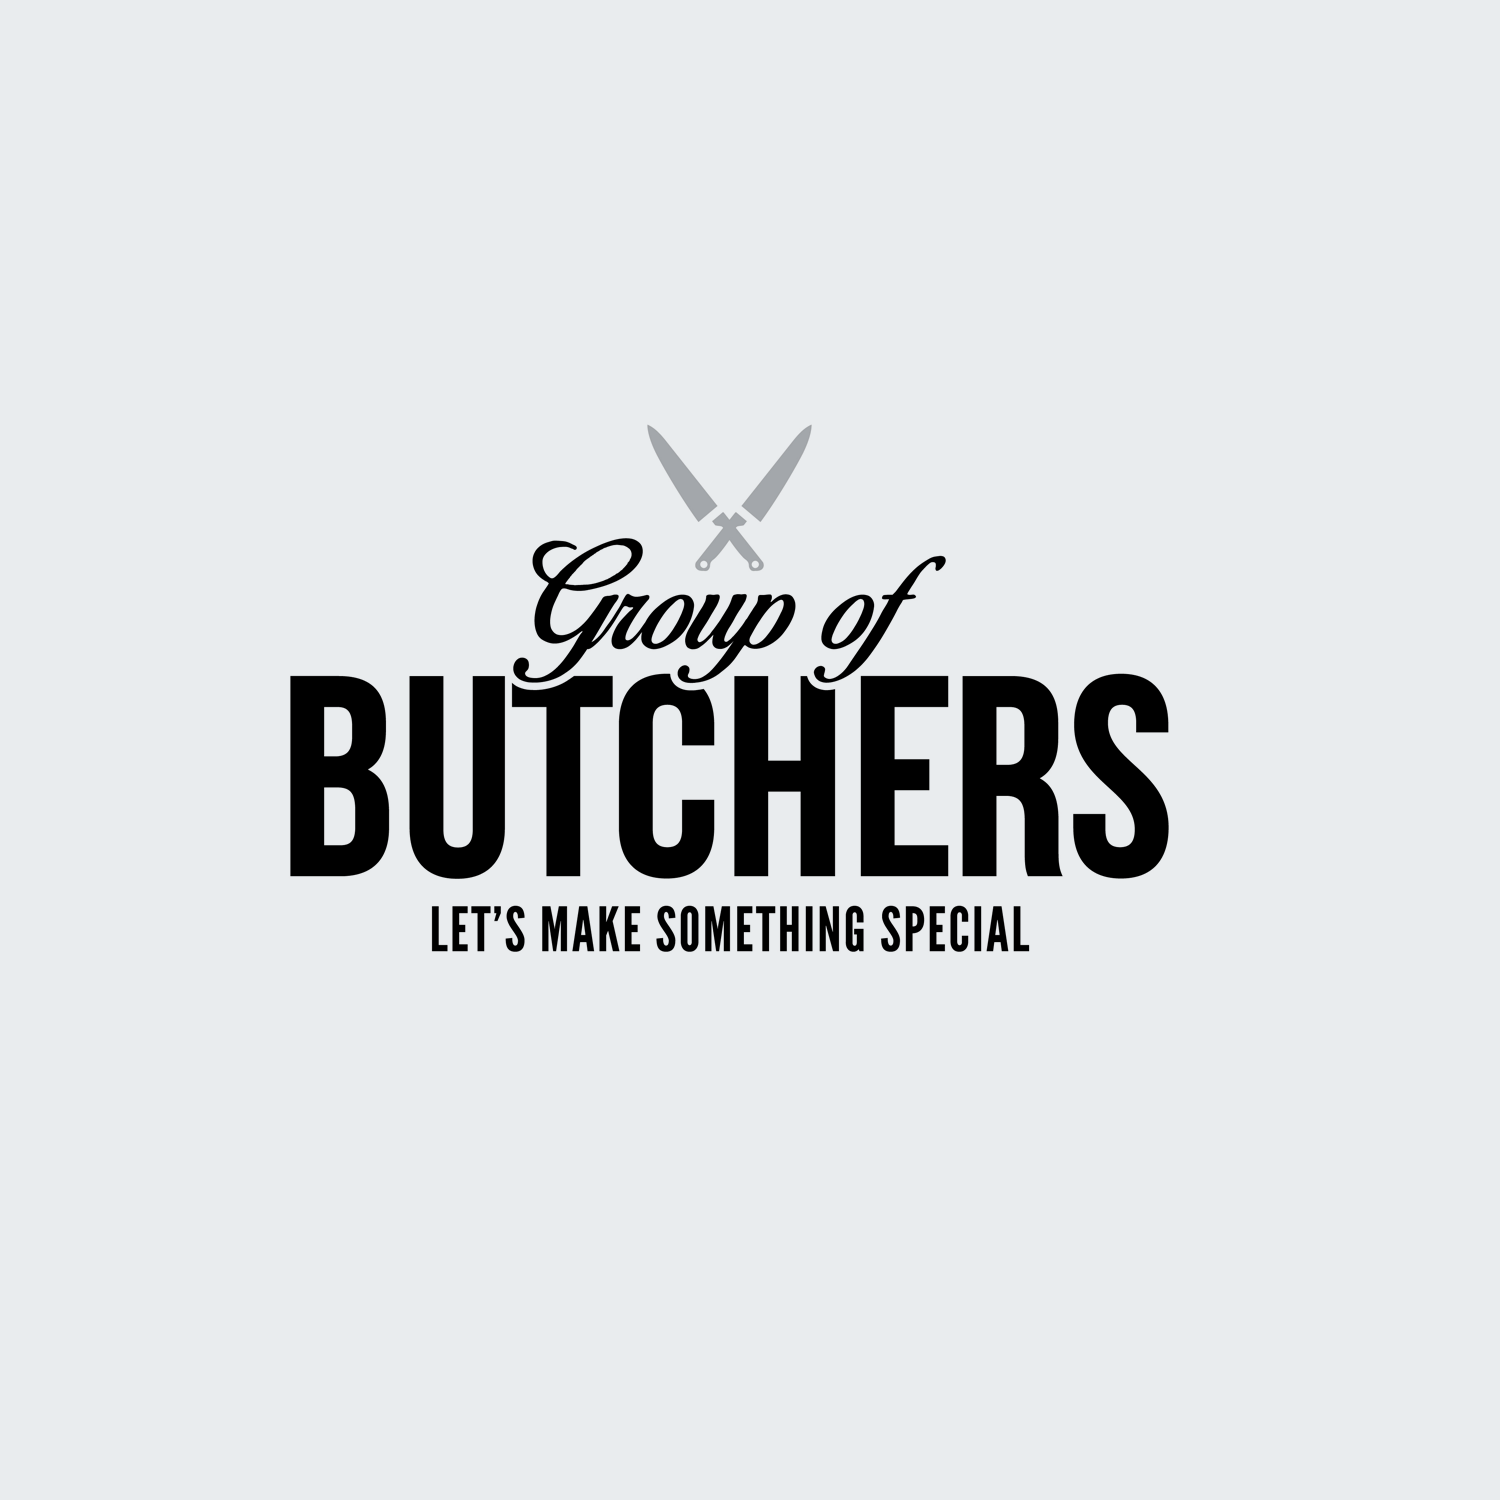 Group of butchers logo